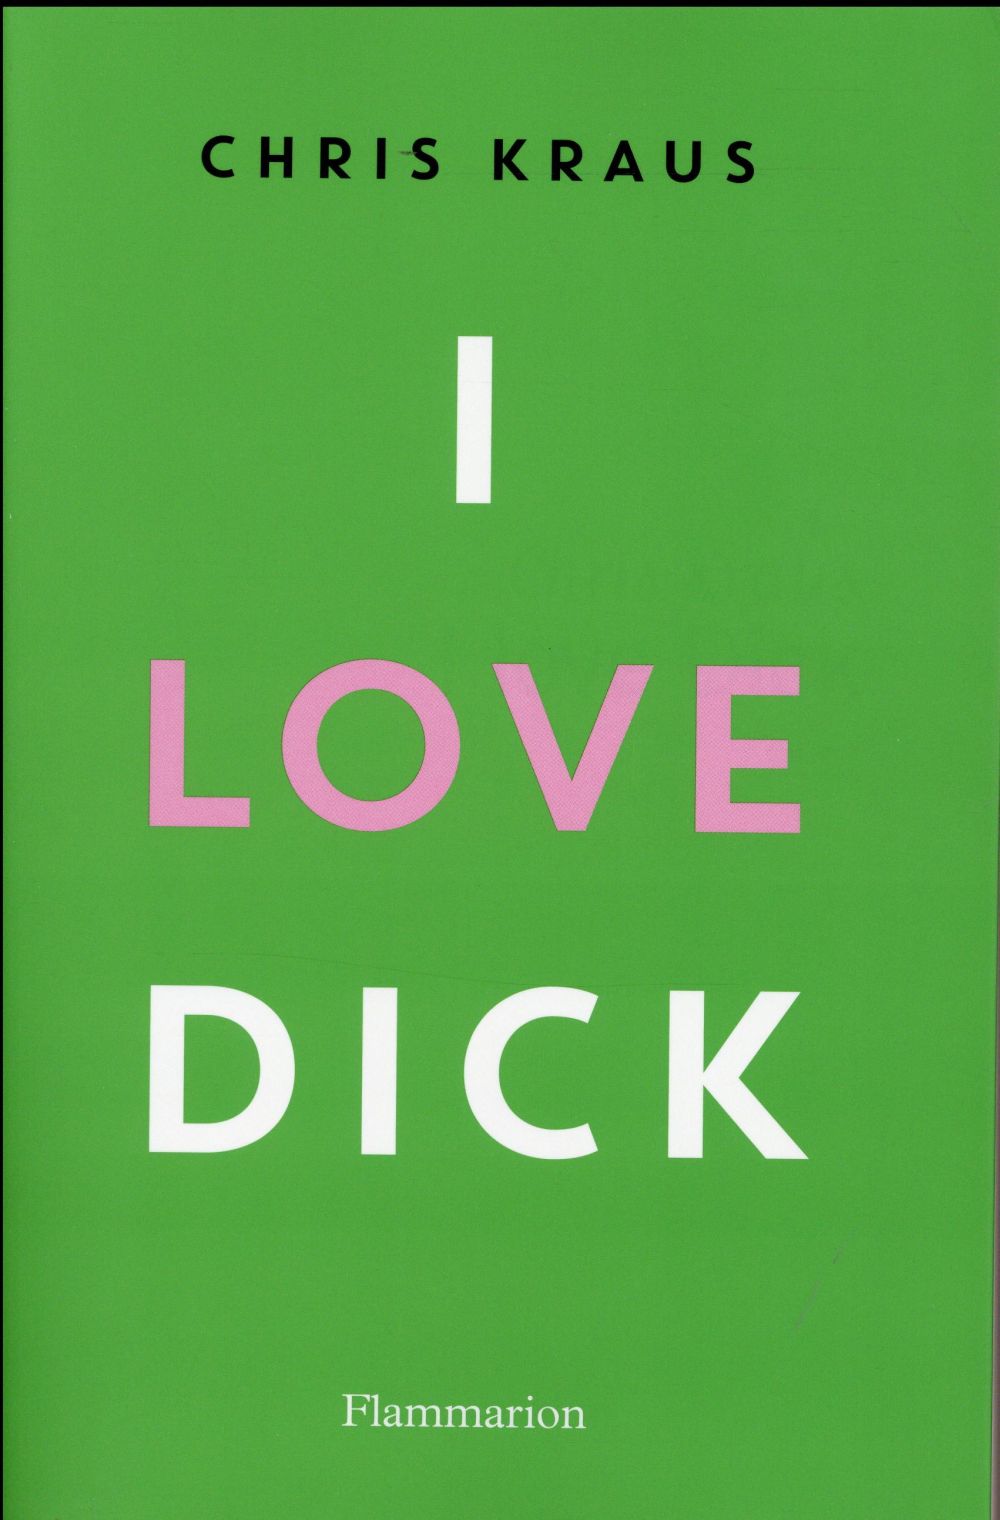 I LOVE DICK